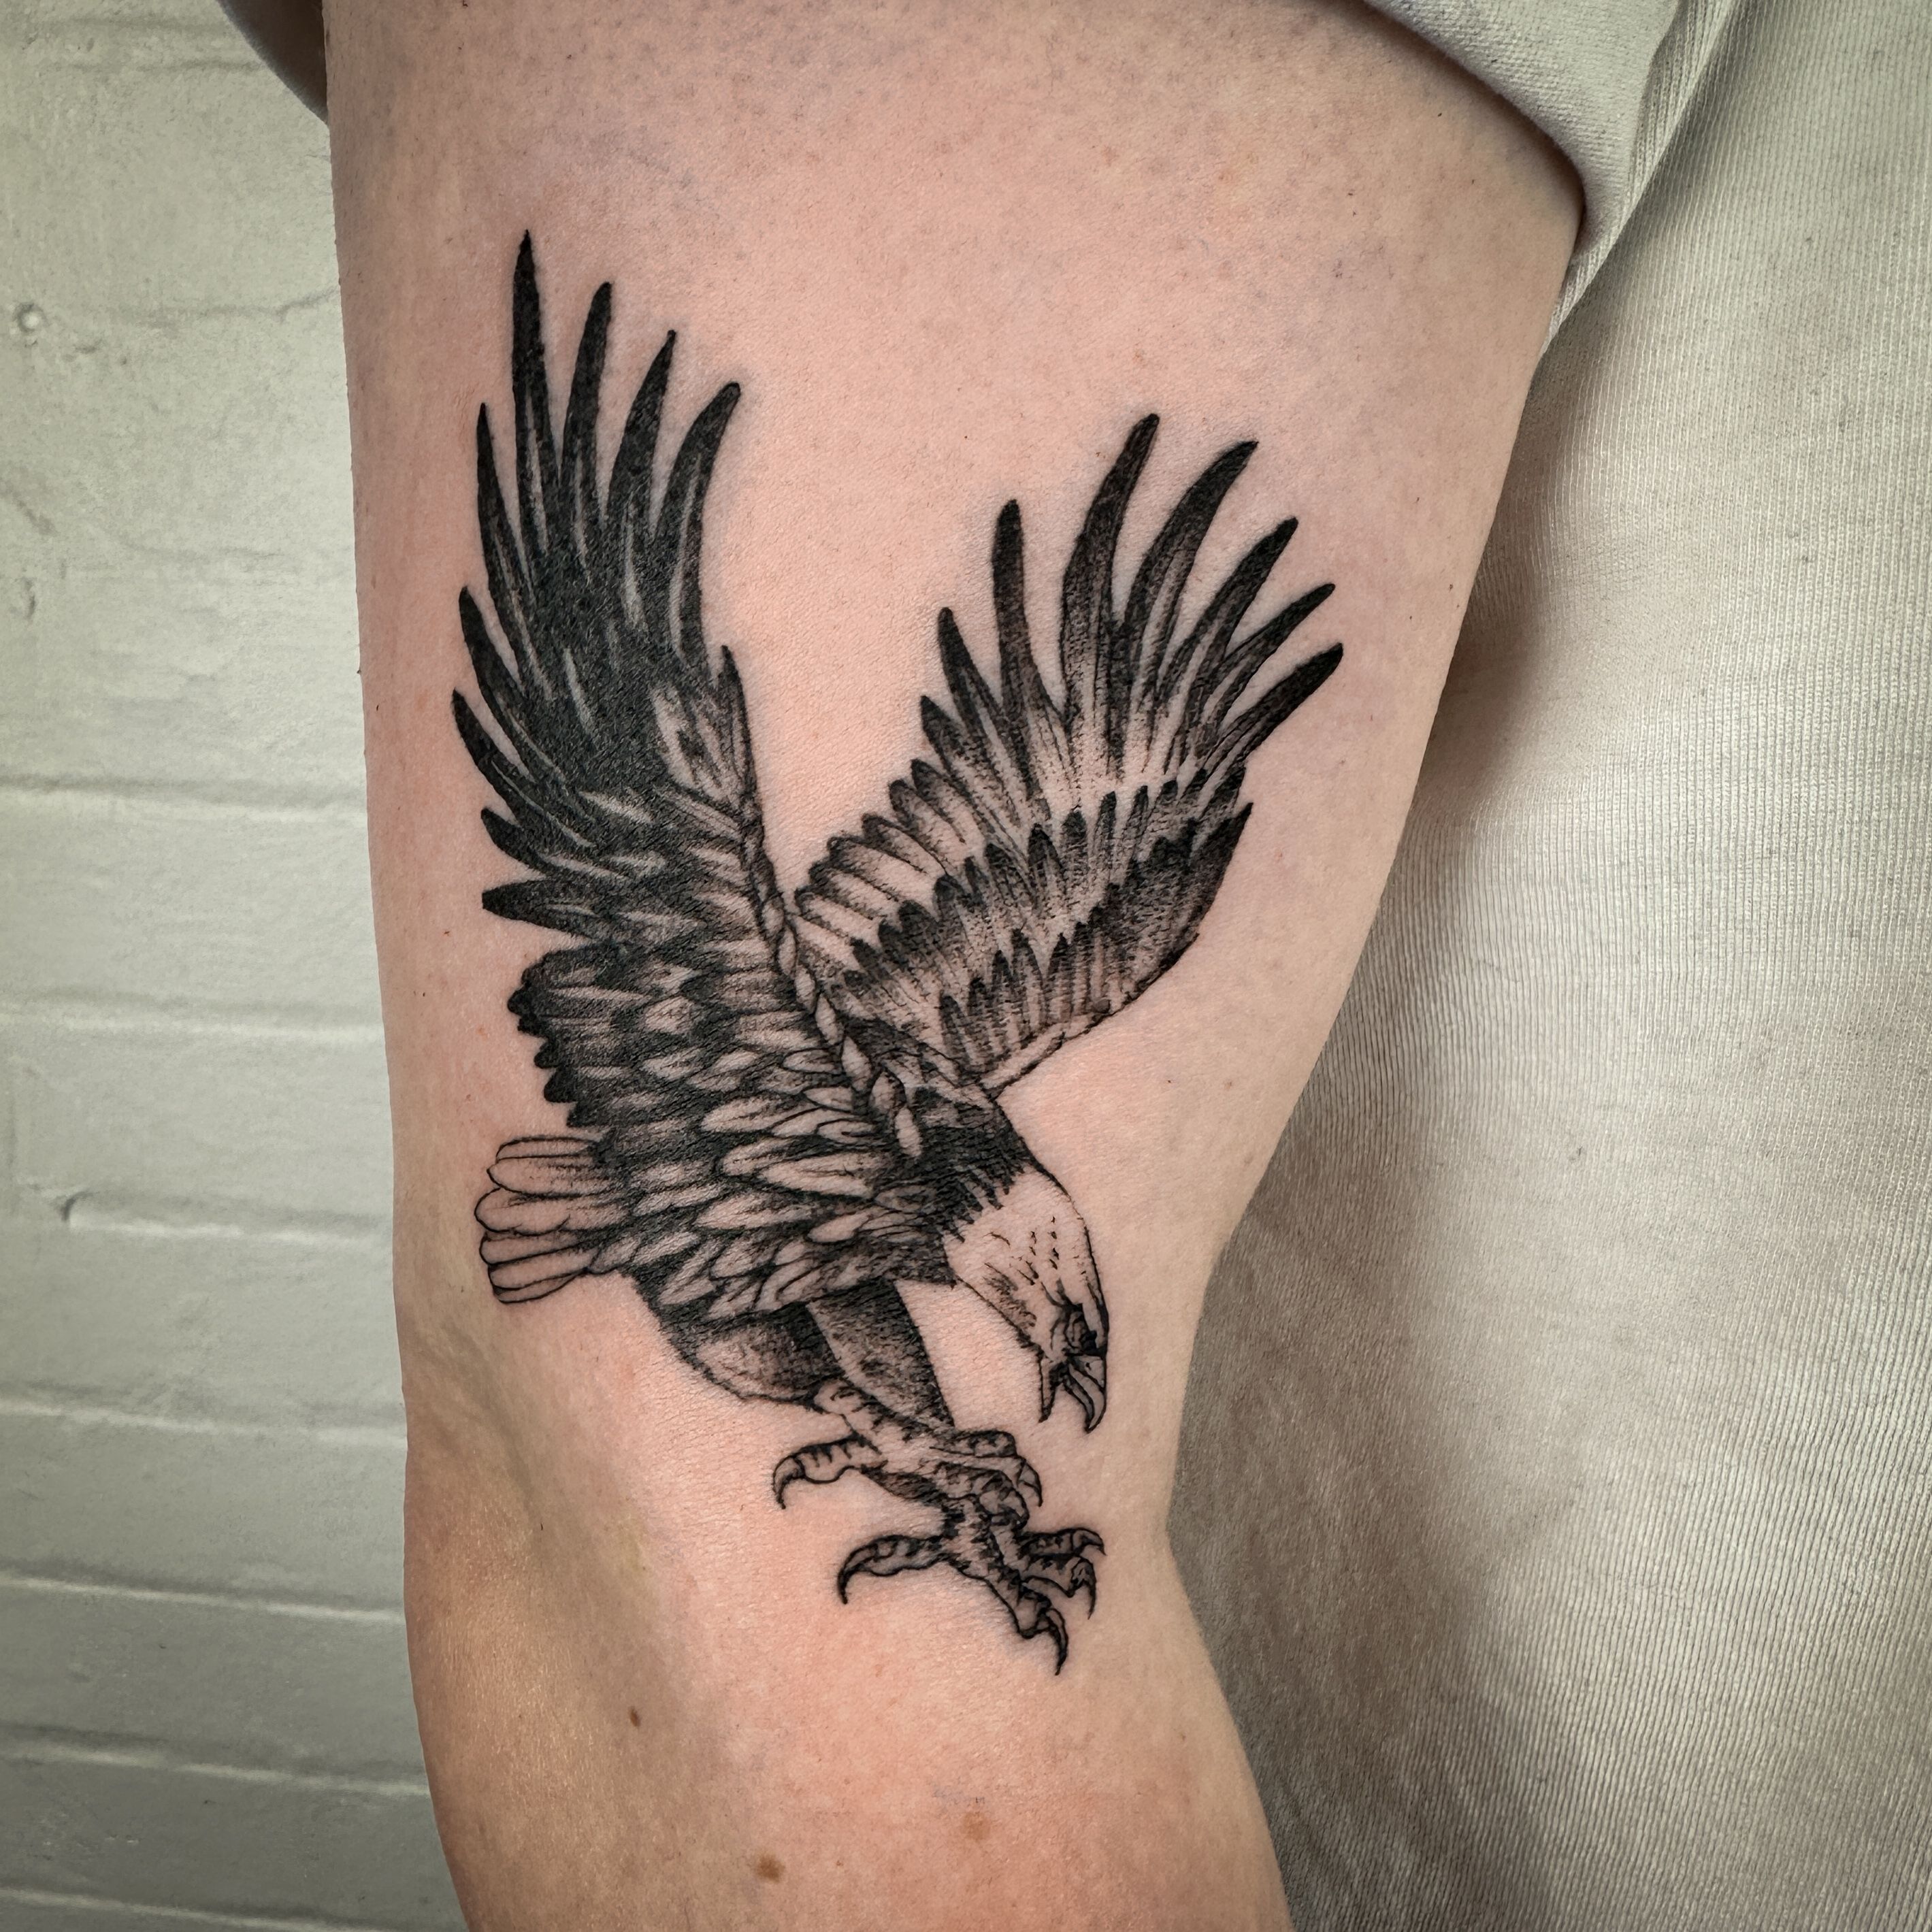 Shades of Grey Tattoo Studio - Blac and grey realism Filipino Eagle forearm  tattoo by Jim Cooper #tattoos #pensacola #Filipino eagle # Happy Guru  Aftercare | Facebook